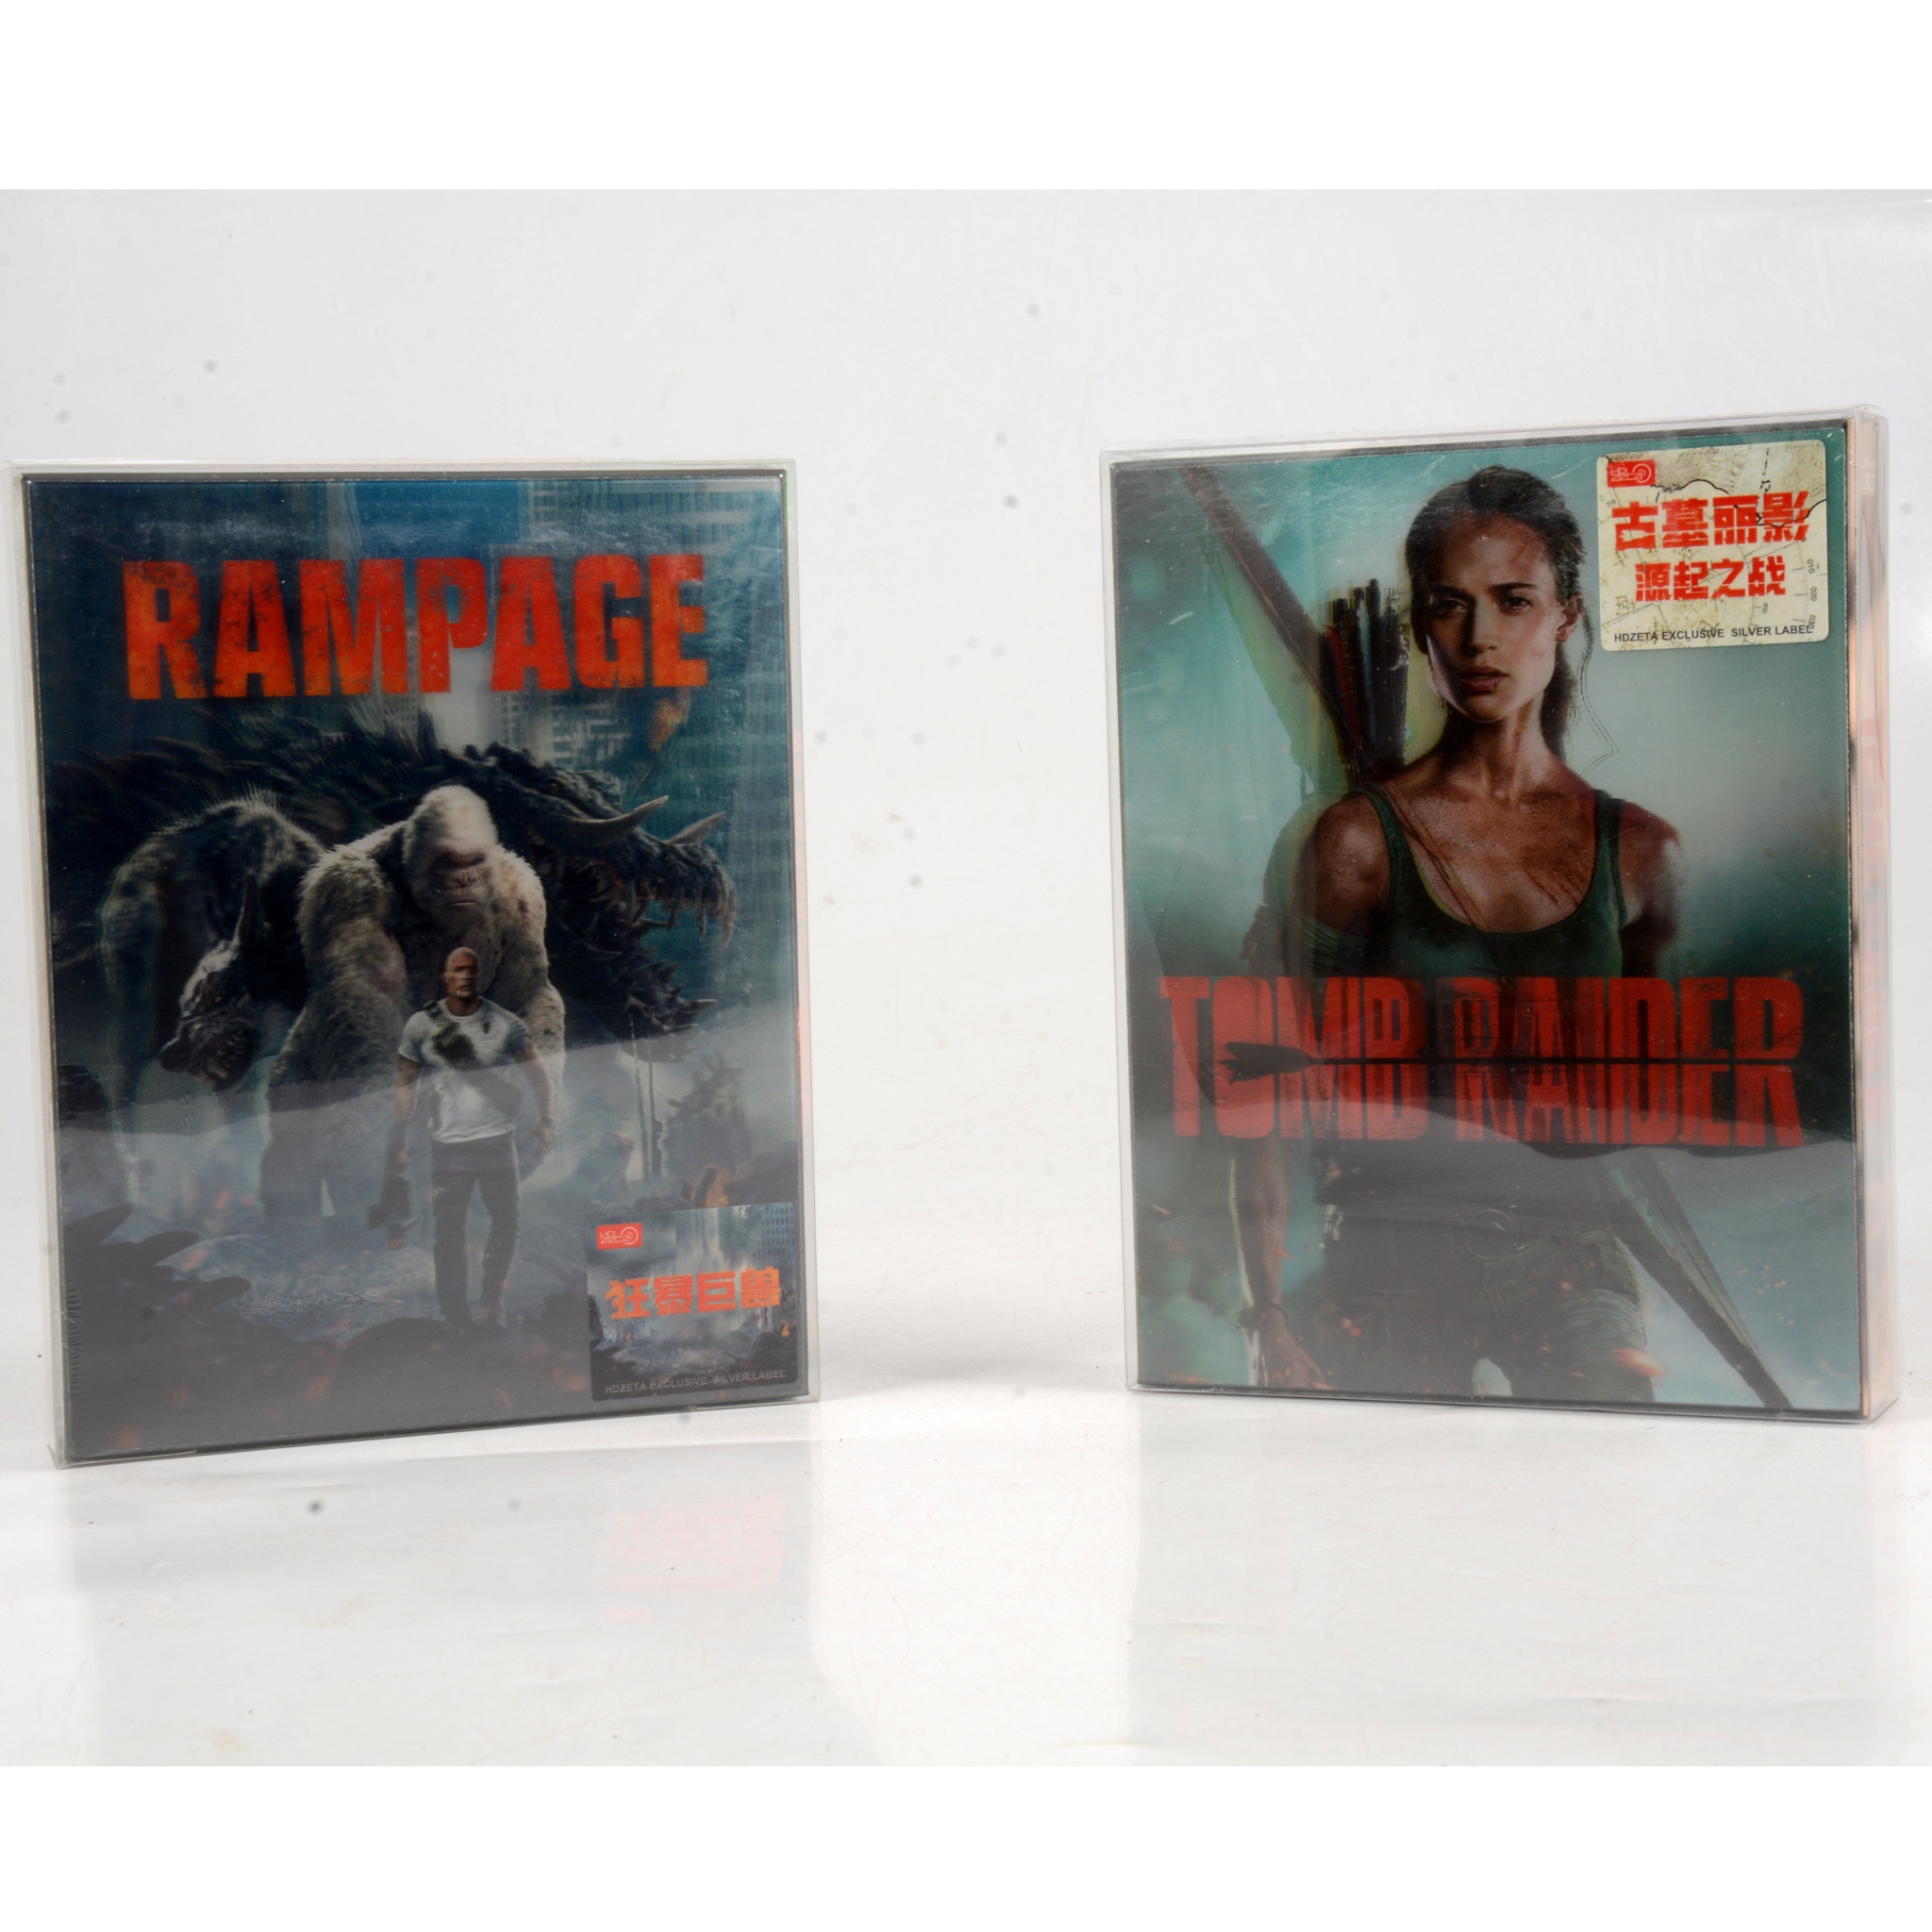 Two Hdzeta Silver Label Steelbook Lenticular 3D Blu-rays, Tomb Raider and Rampage